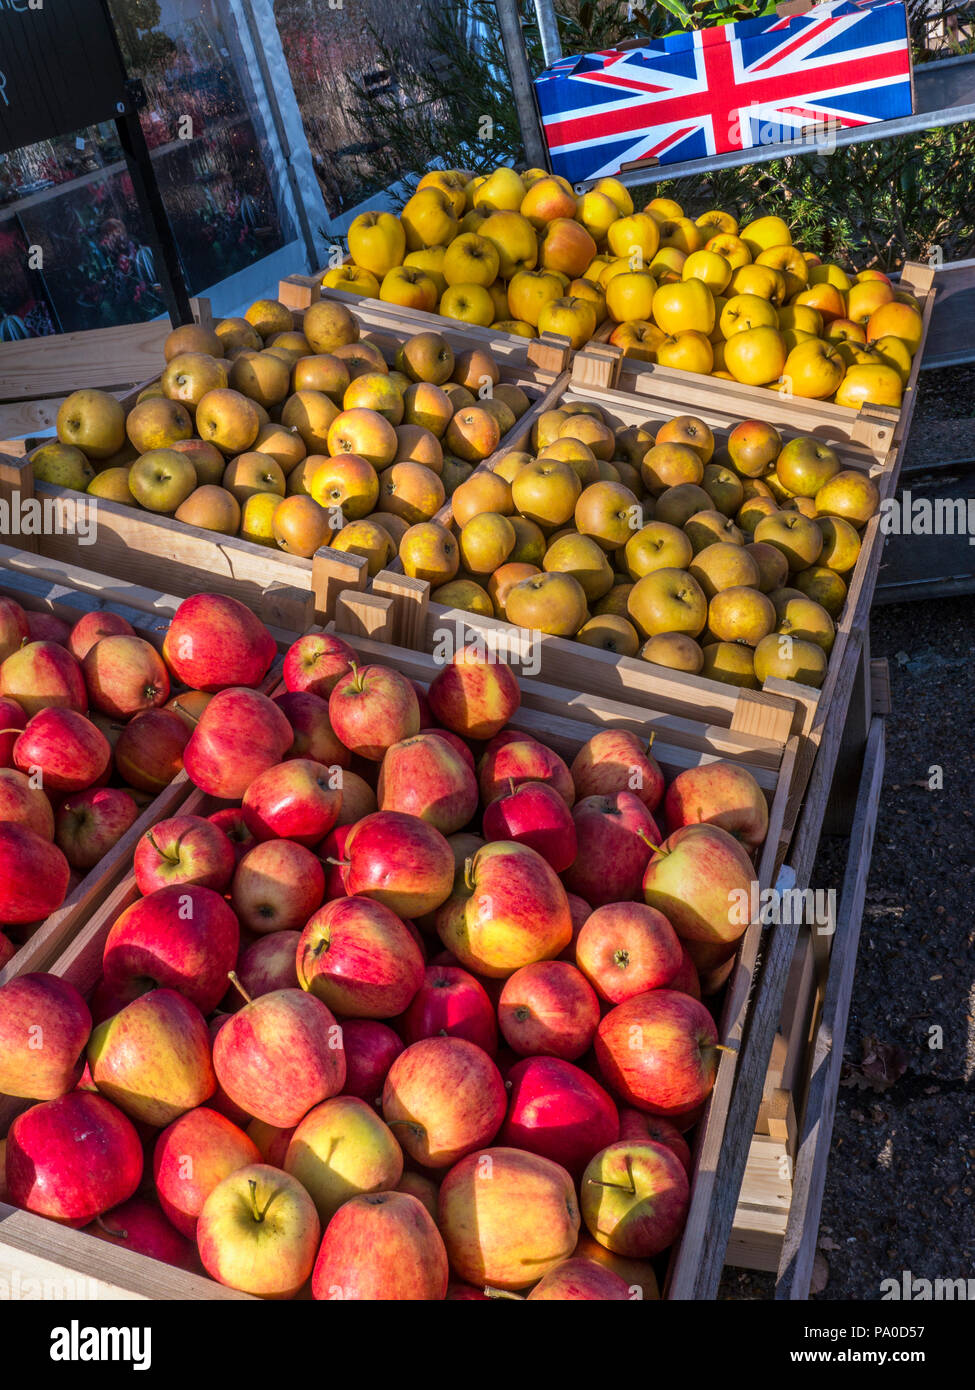 English Apples Union Flag Produce Farmers Market stall Pinova / Russet / Opal apples illuminated late autumn sunshine with Union Jack on apple crate Stock Photo